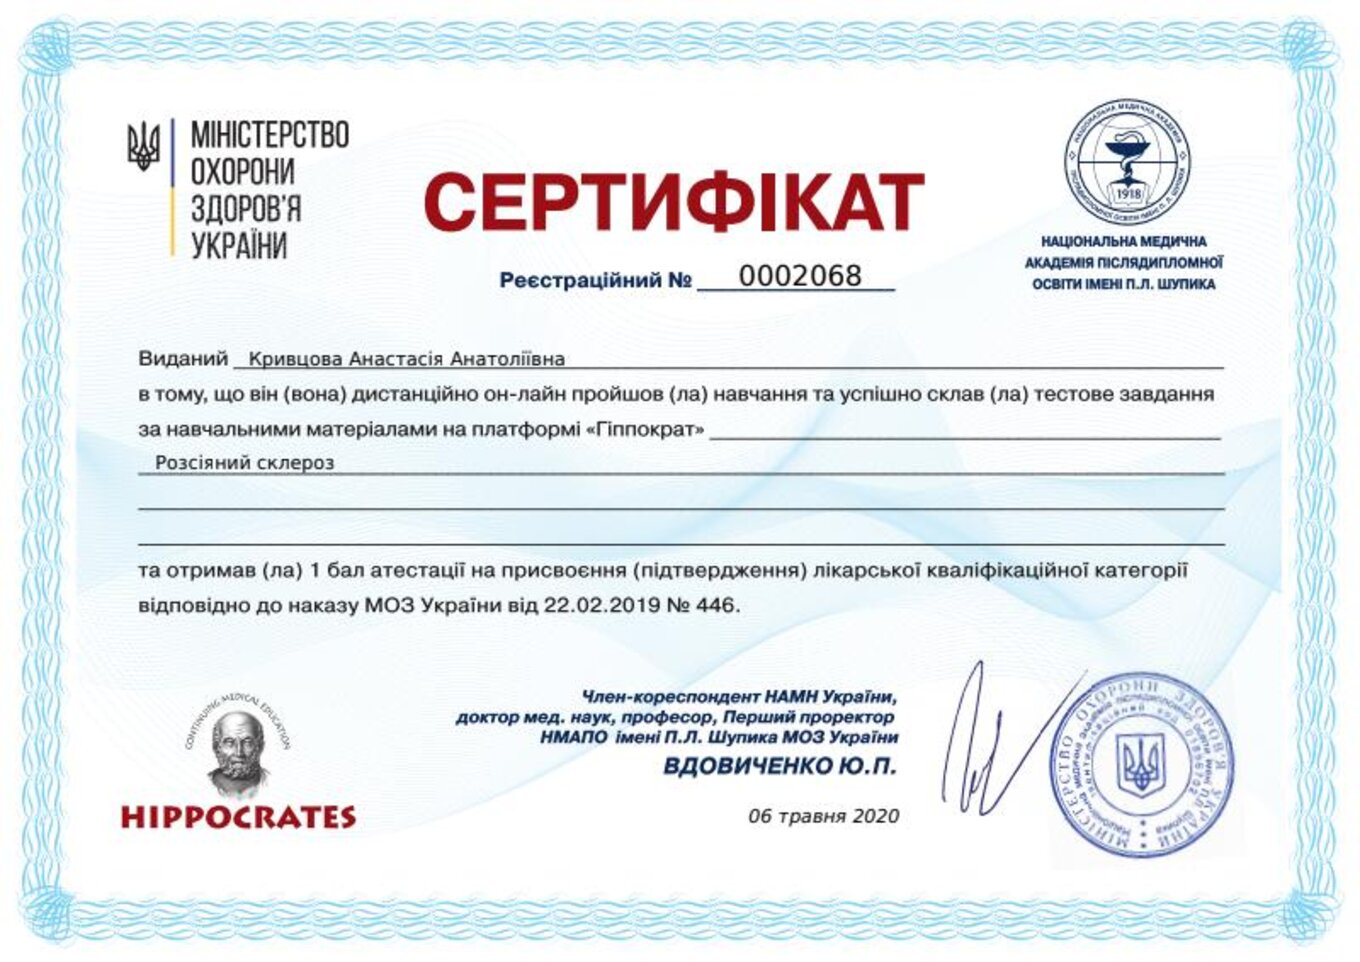 certificates/kuzmenko-krivcova-anastasiya-anatoliyivna/erc-krivcova-cert-15.jpg